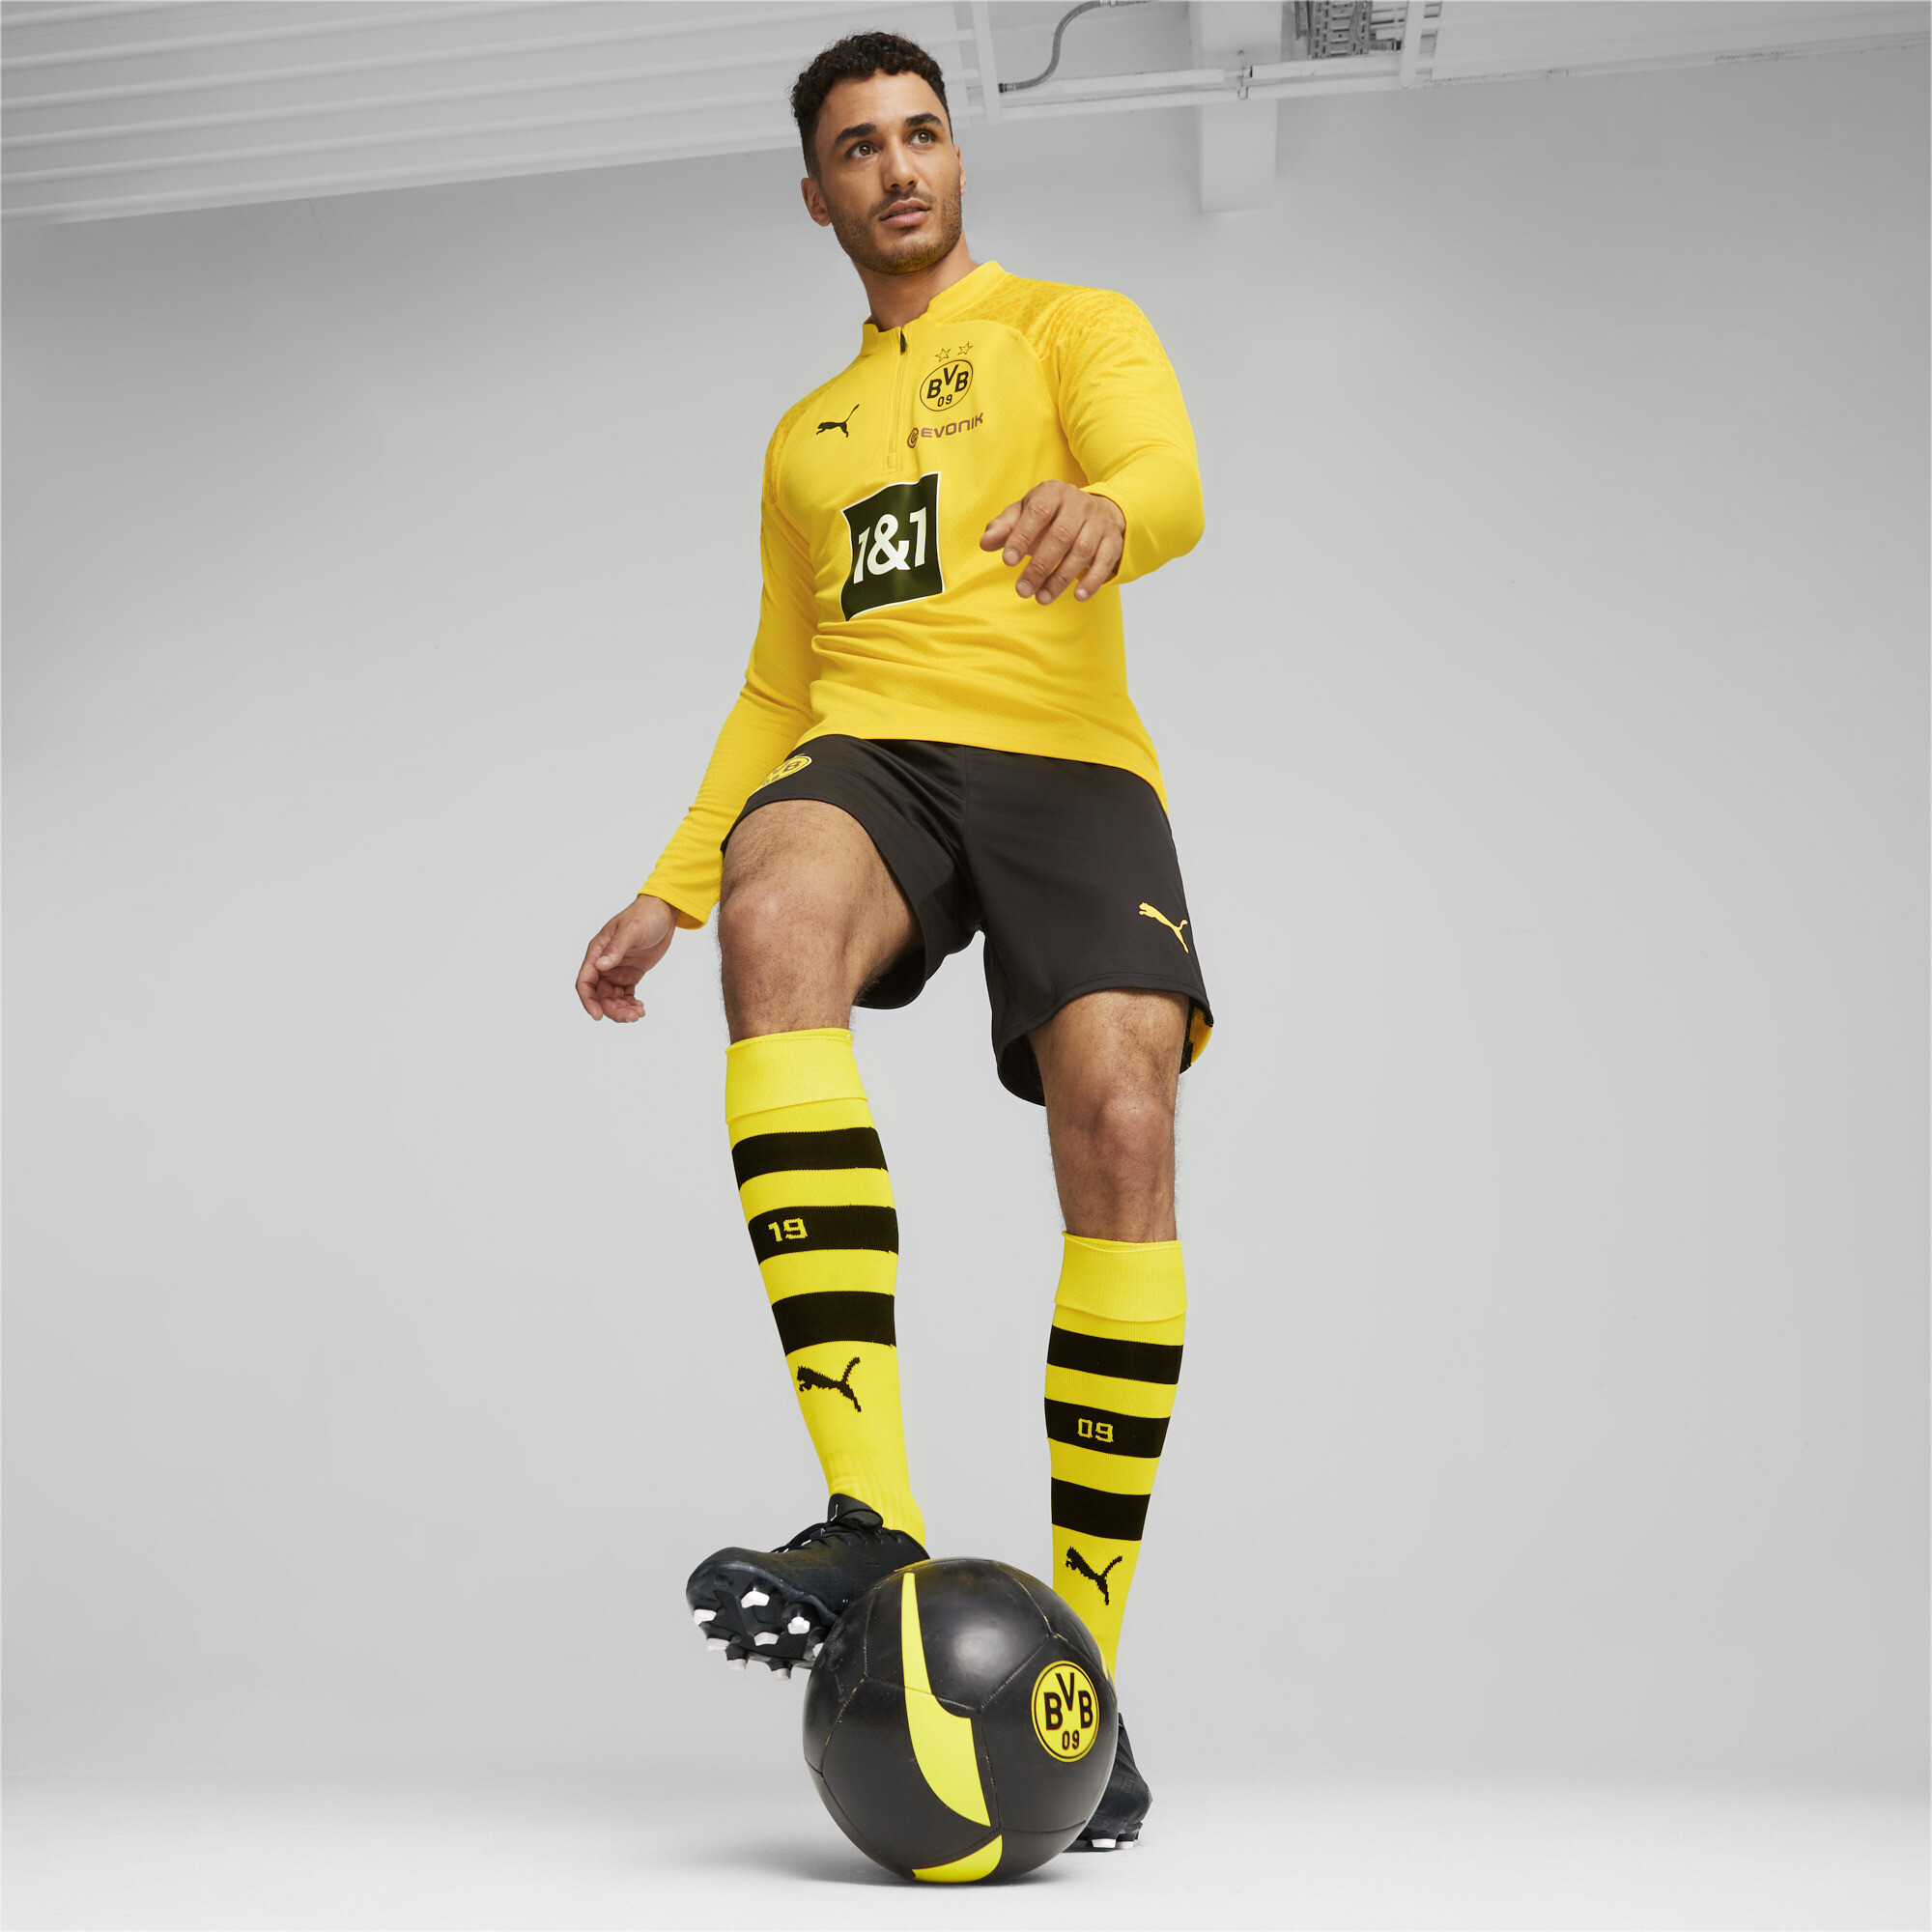 Men's Puma Borussia Dortmund Football Training Quarter-zip Top, Yellow Top, Size S Top, Clothing